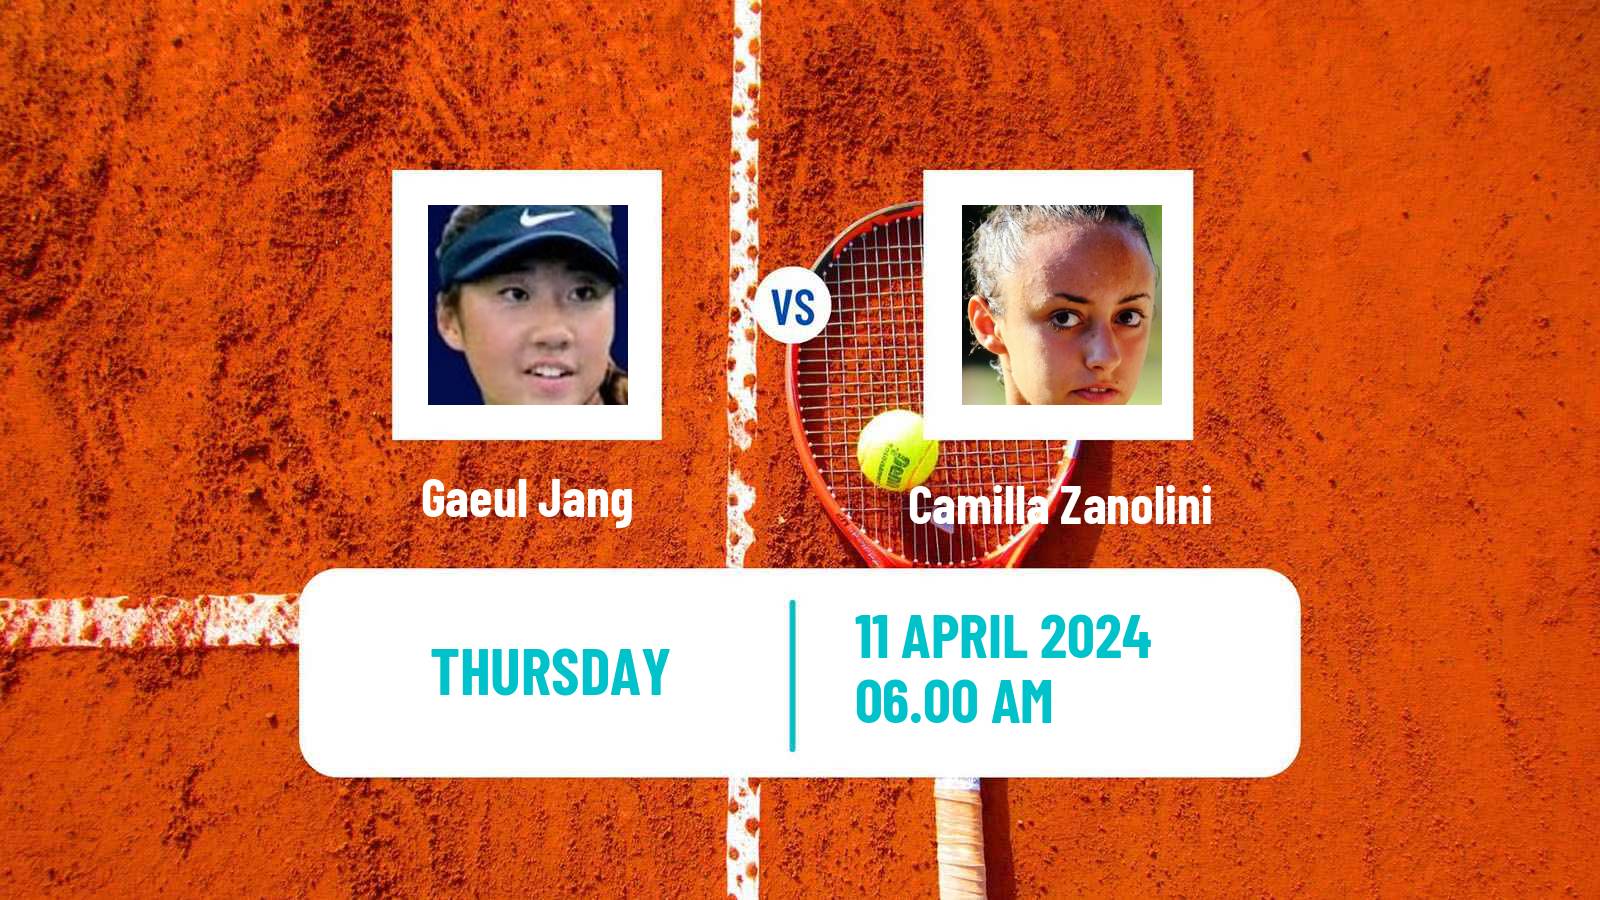 Tennis ITF W15 Monastir 13 Women Gaeul Jang - Camilla Zanolini